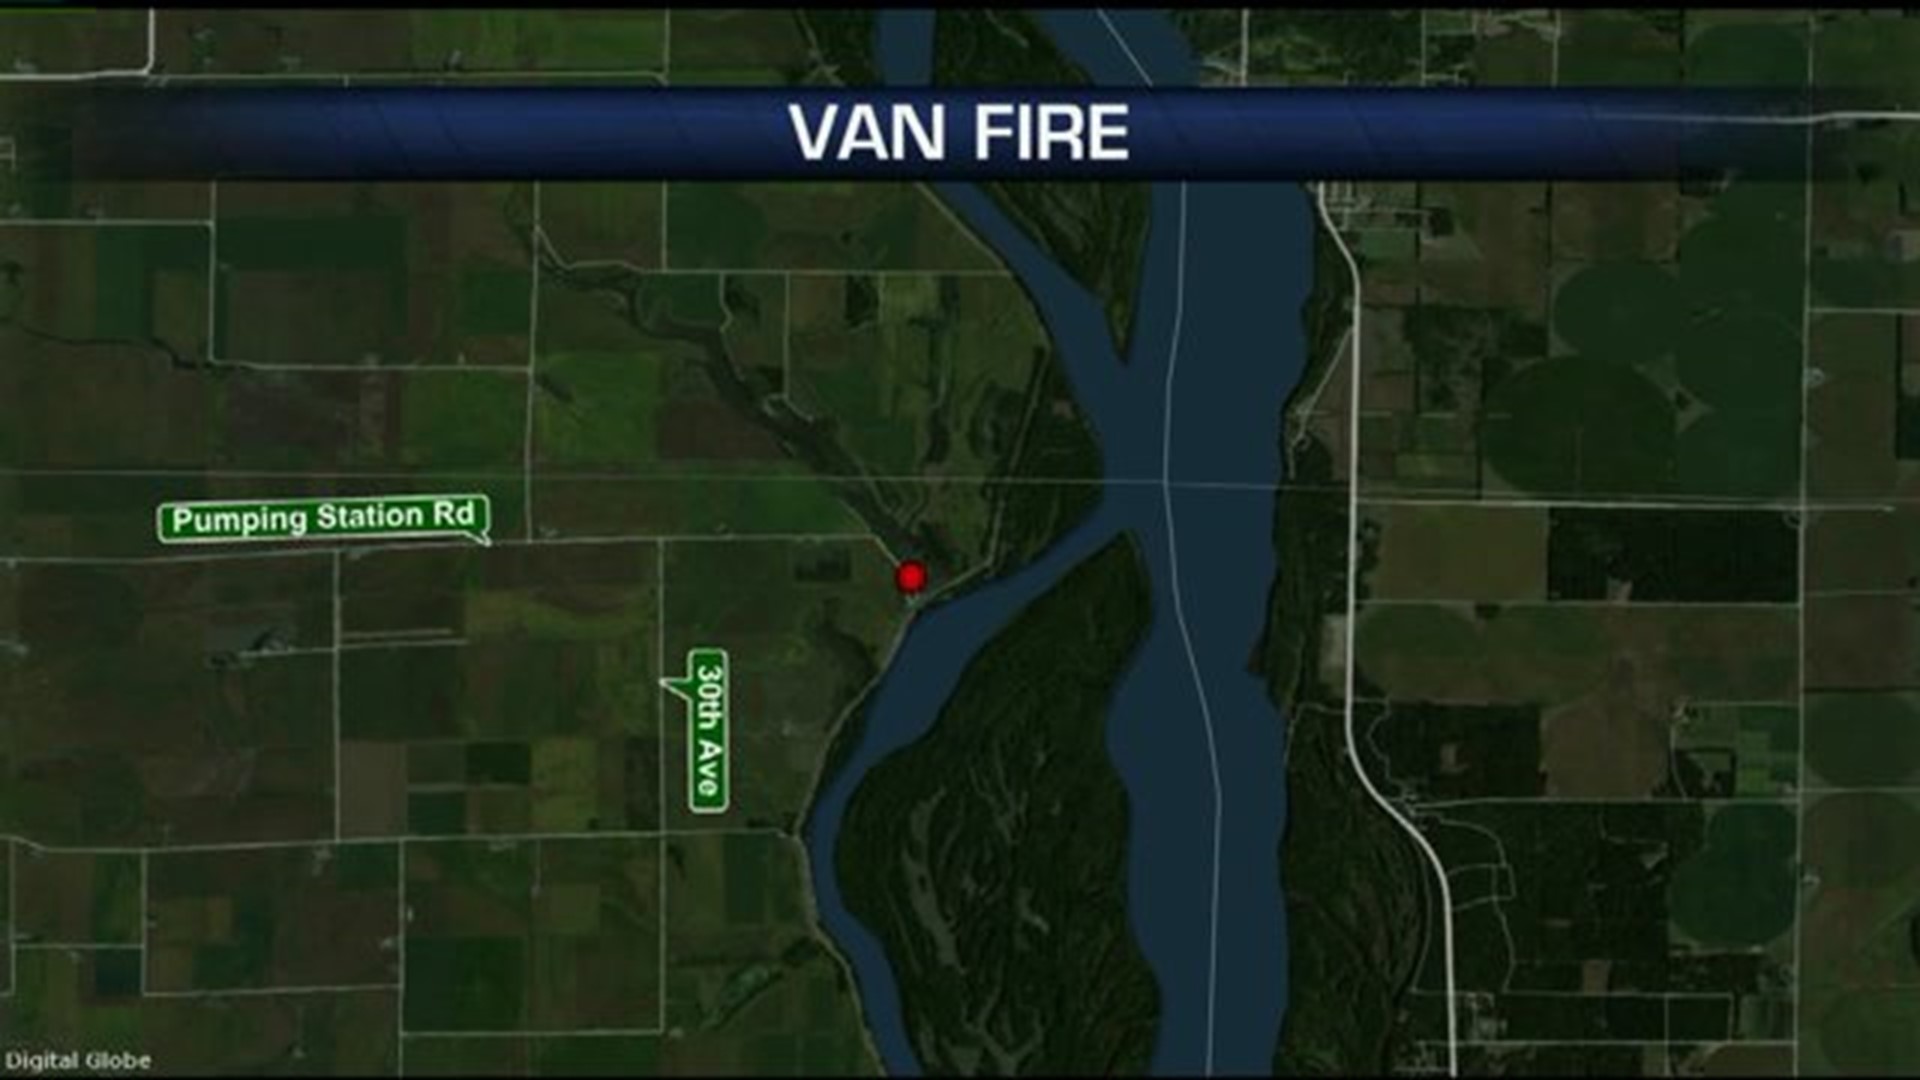 Man injured in van fire